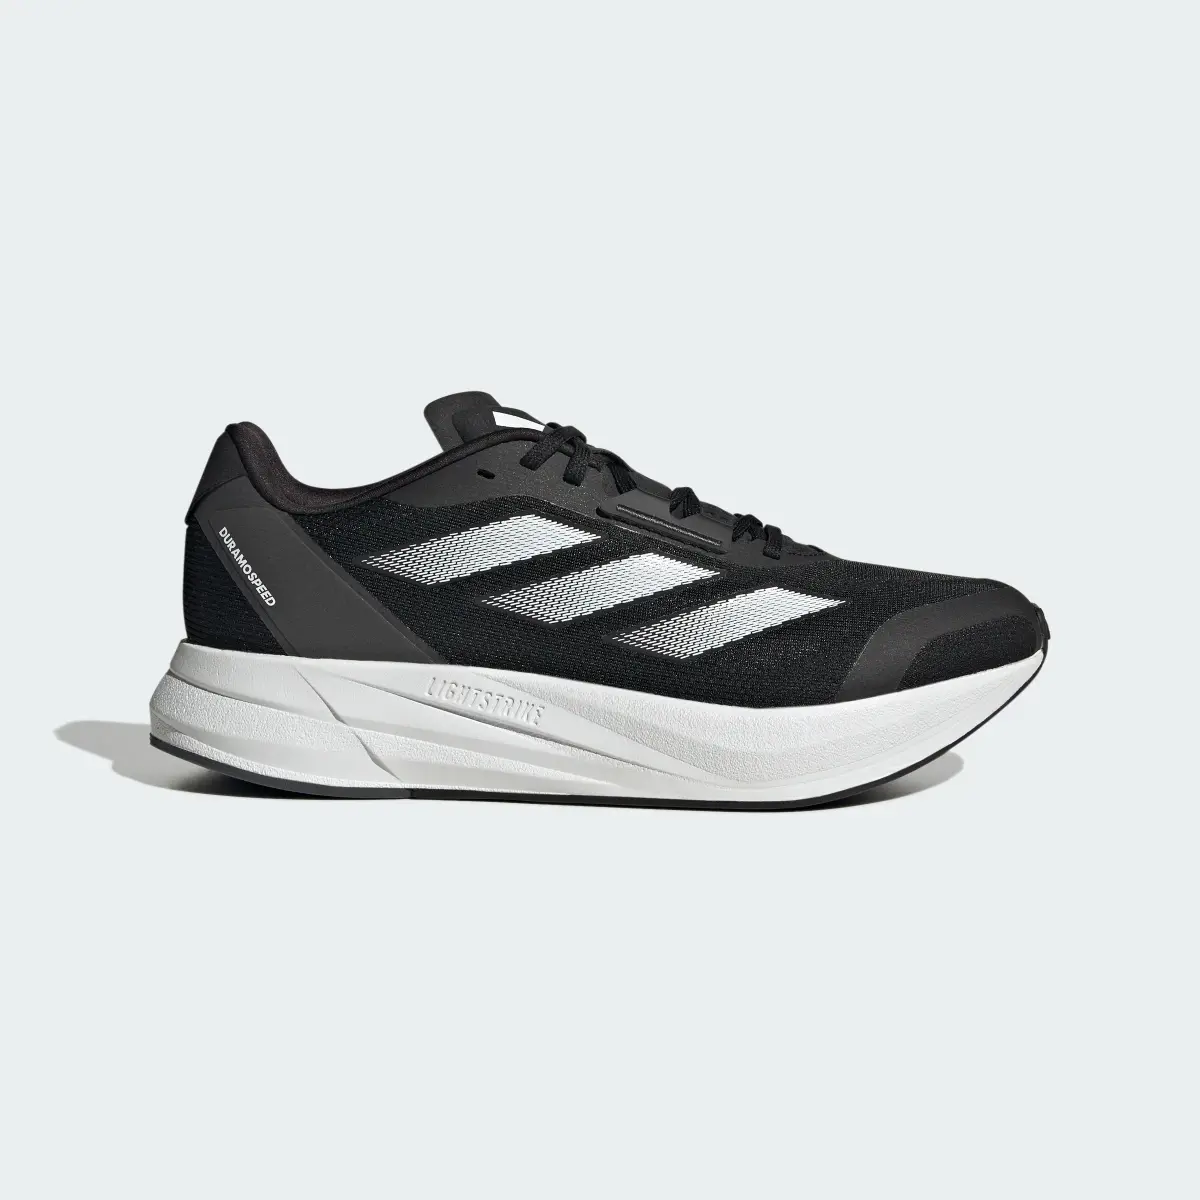 Adidas Duramo Speed Ayakkabı. 2